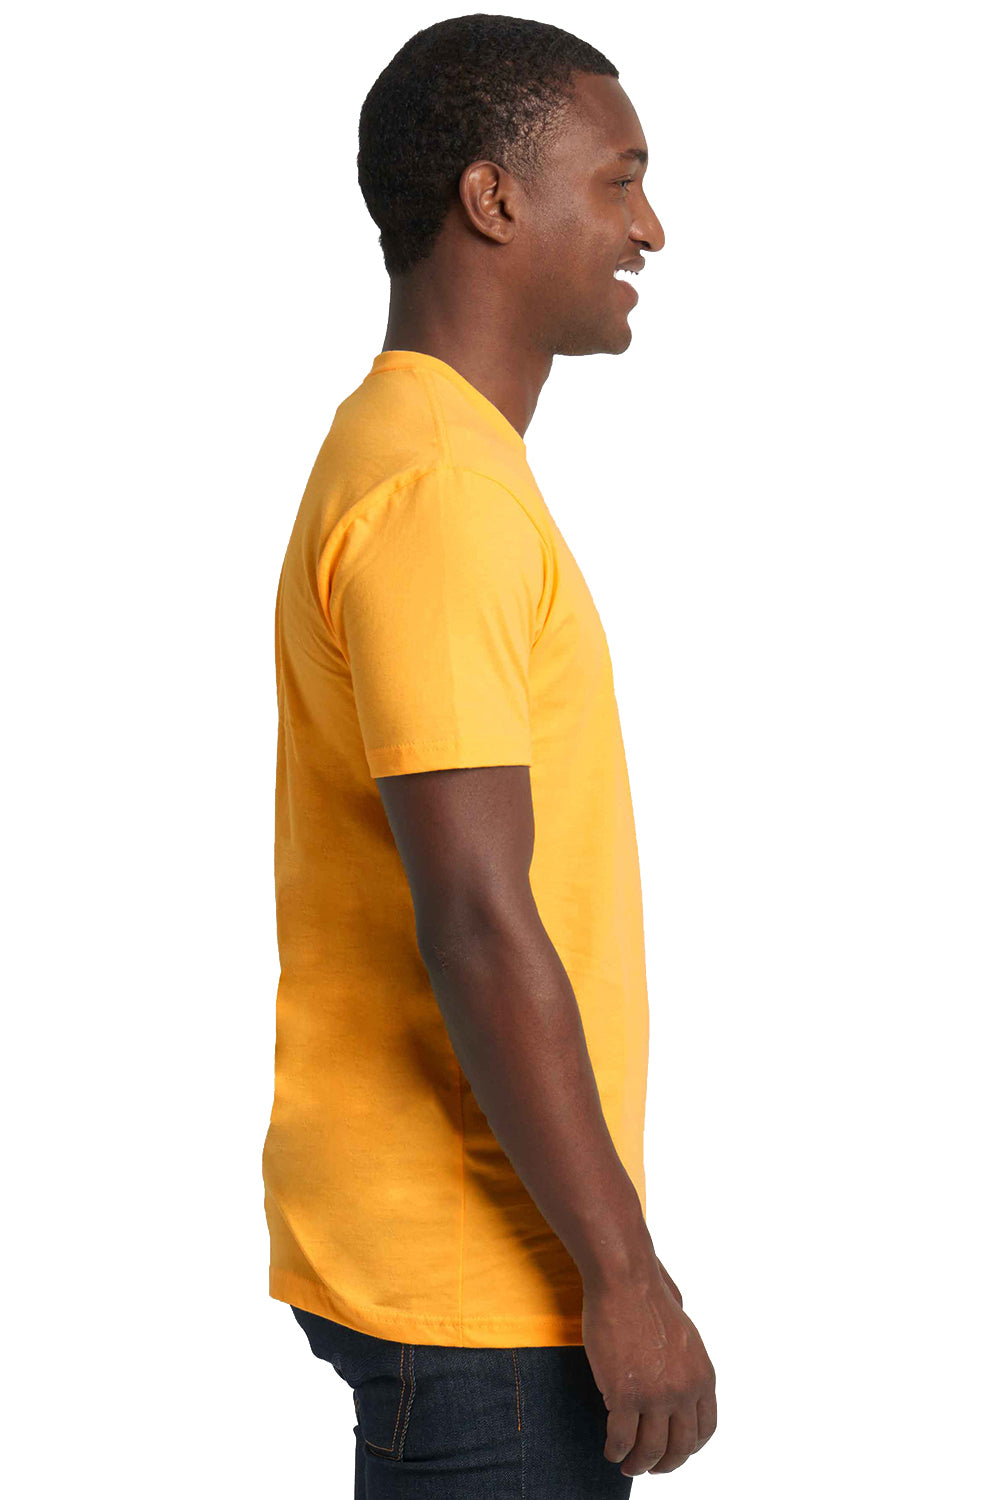 Next Level 3600 Mens Fine Jersey Short Sleeve Crewneck T-Shirt Gold Side